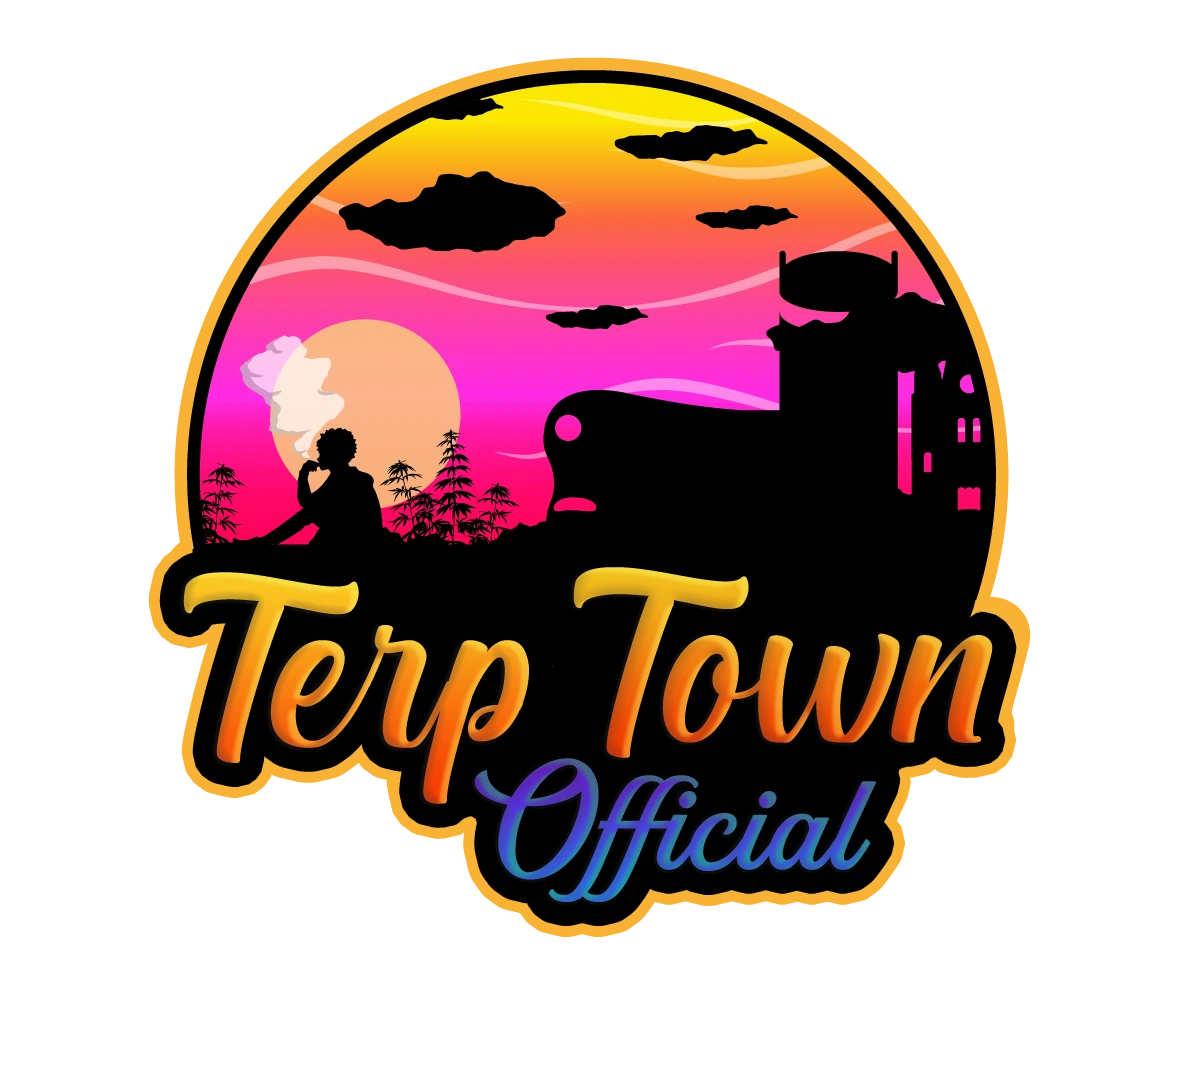 Terp Town